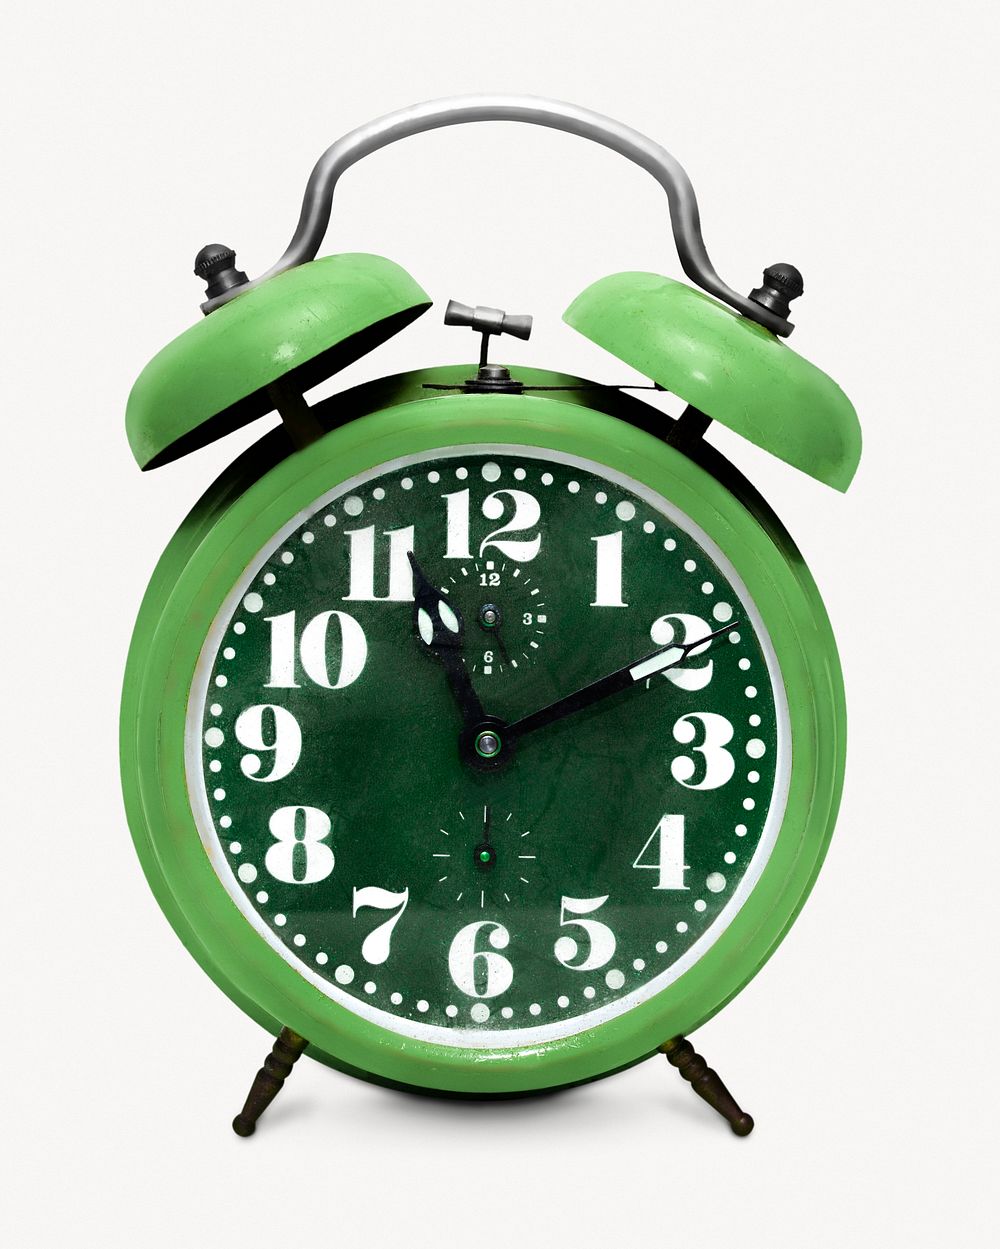 Vintage alarm clock, isolated object image